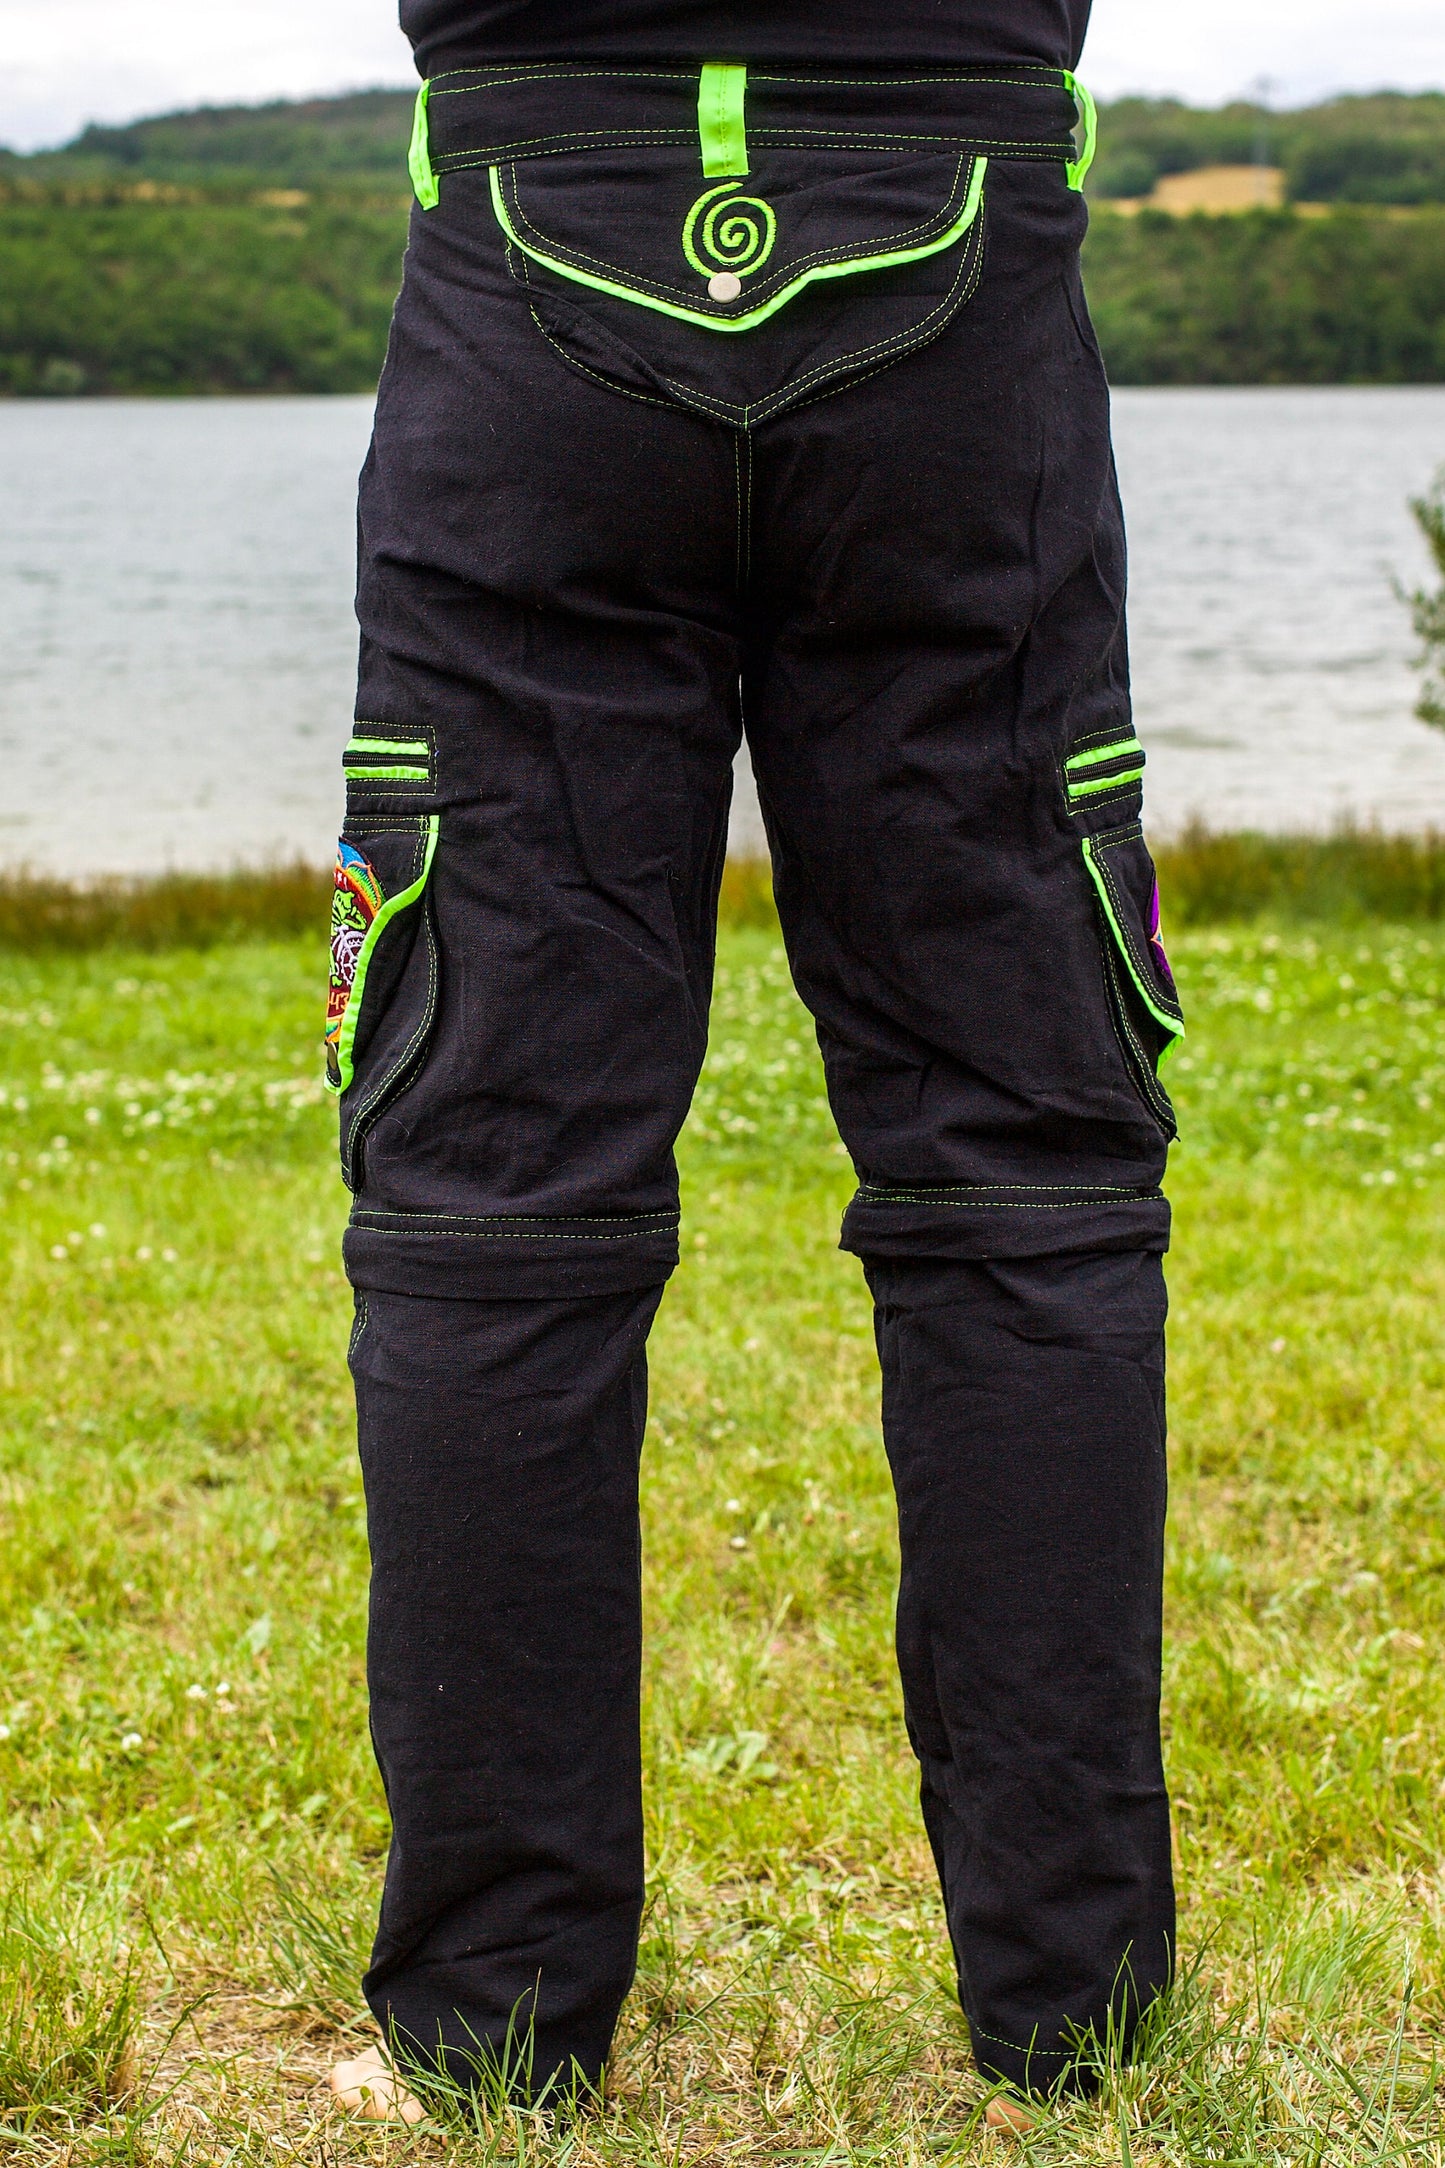 Flower of Life Pants - 2 in 1 pants - 9 pockets custom size handmade sacred geometry clamdiggers comfortable and heat adjustive